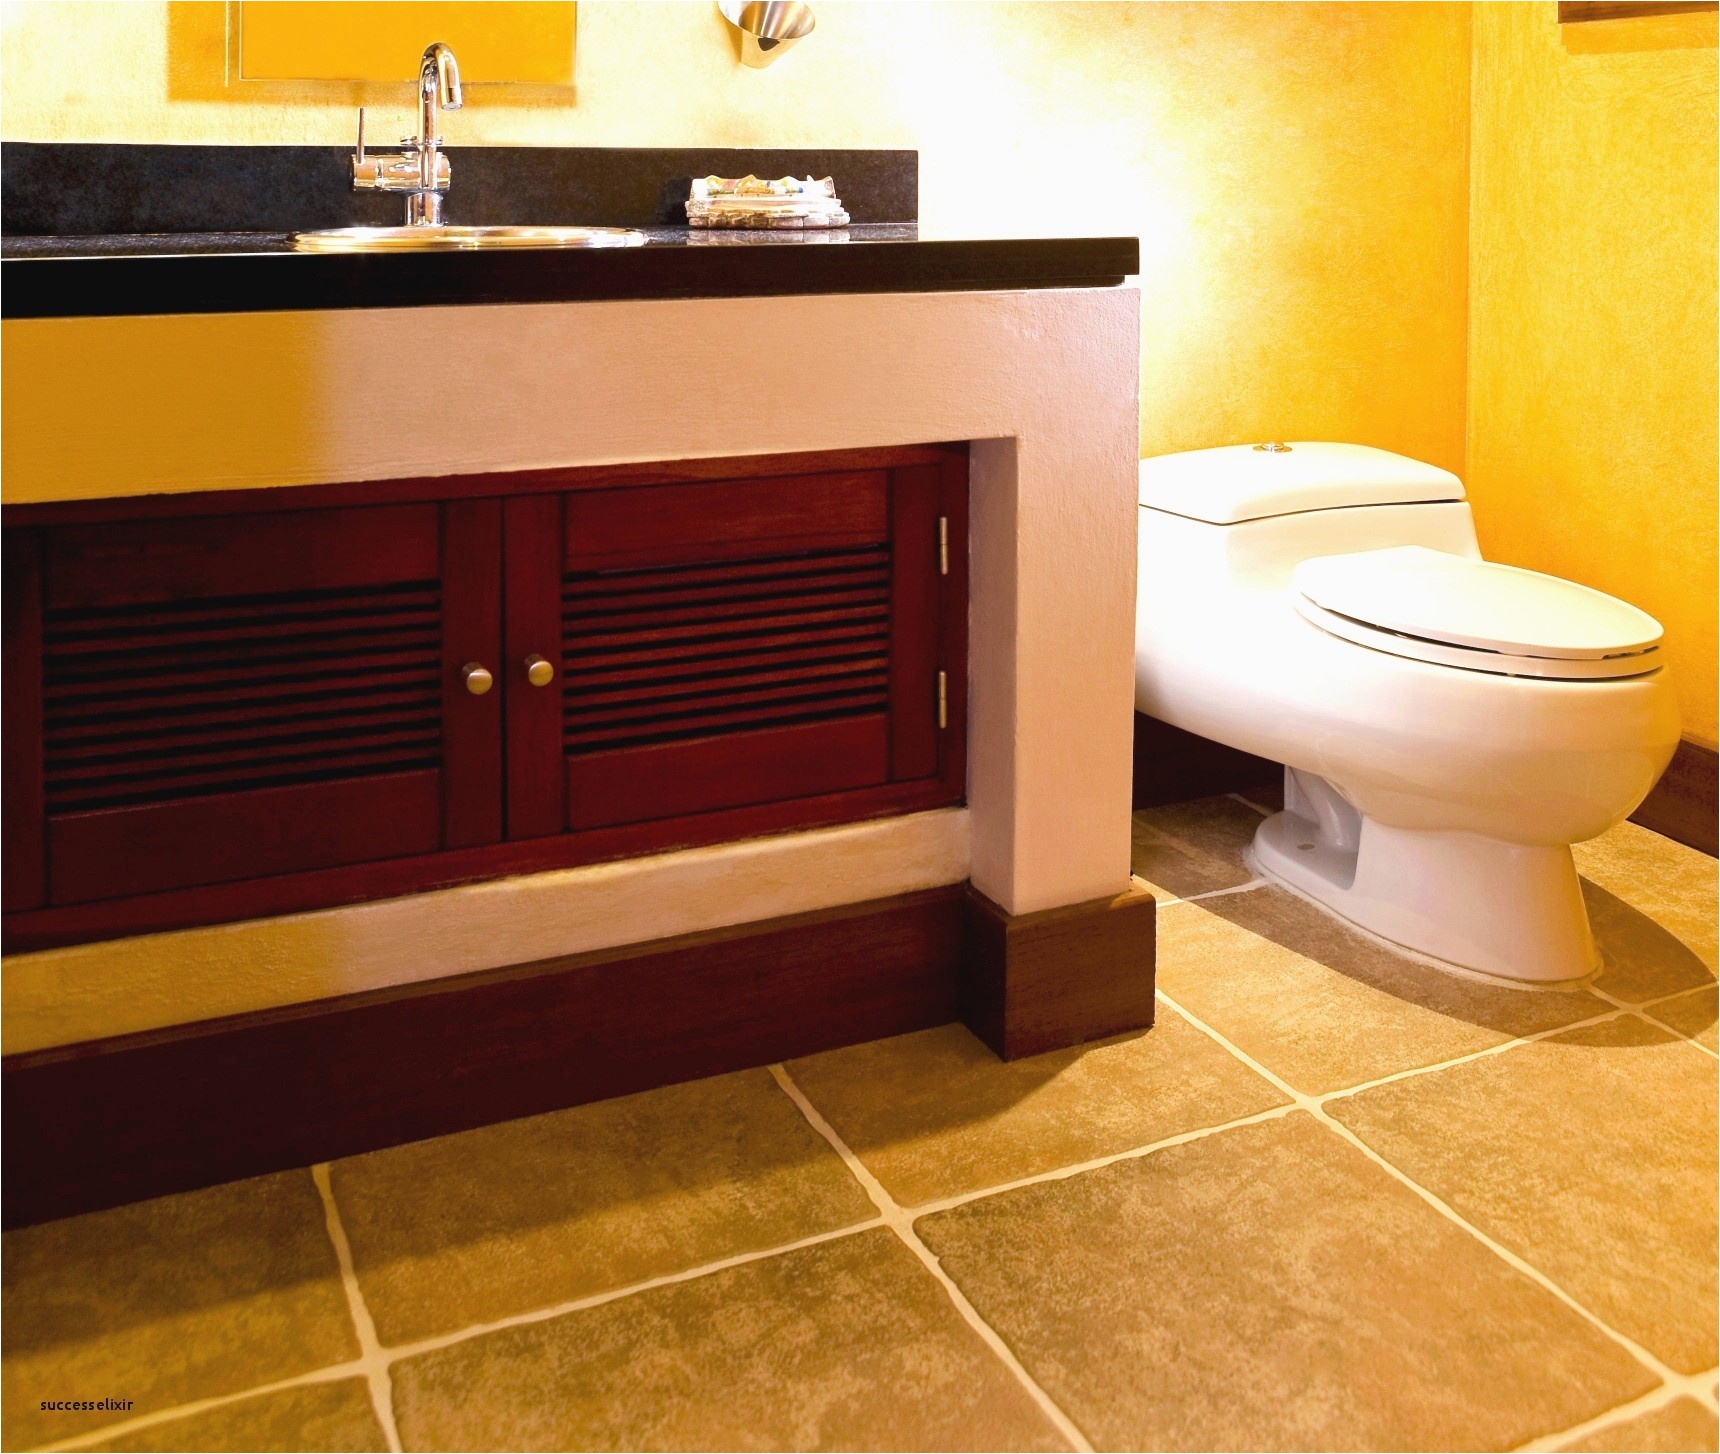 glass tile bathroom fresh floor tiles mosaic bathroom 0d new bathroom floor tiles home 26 glass tile bathroom designs